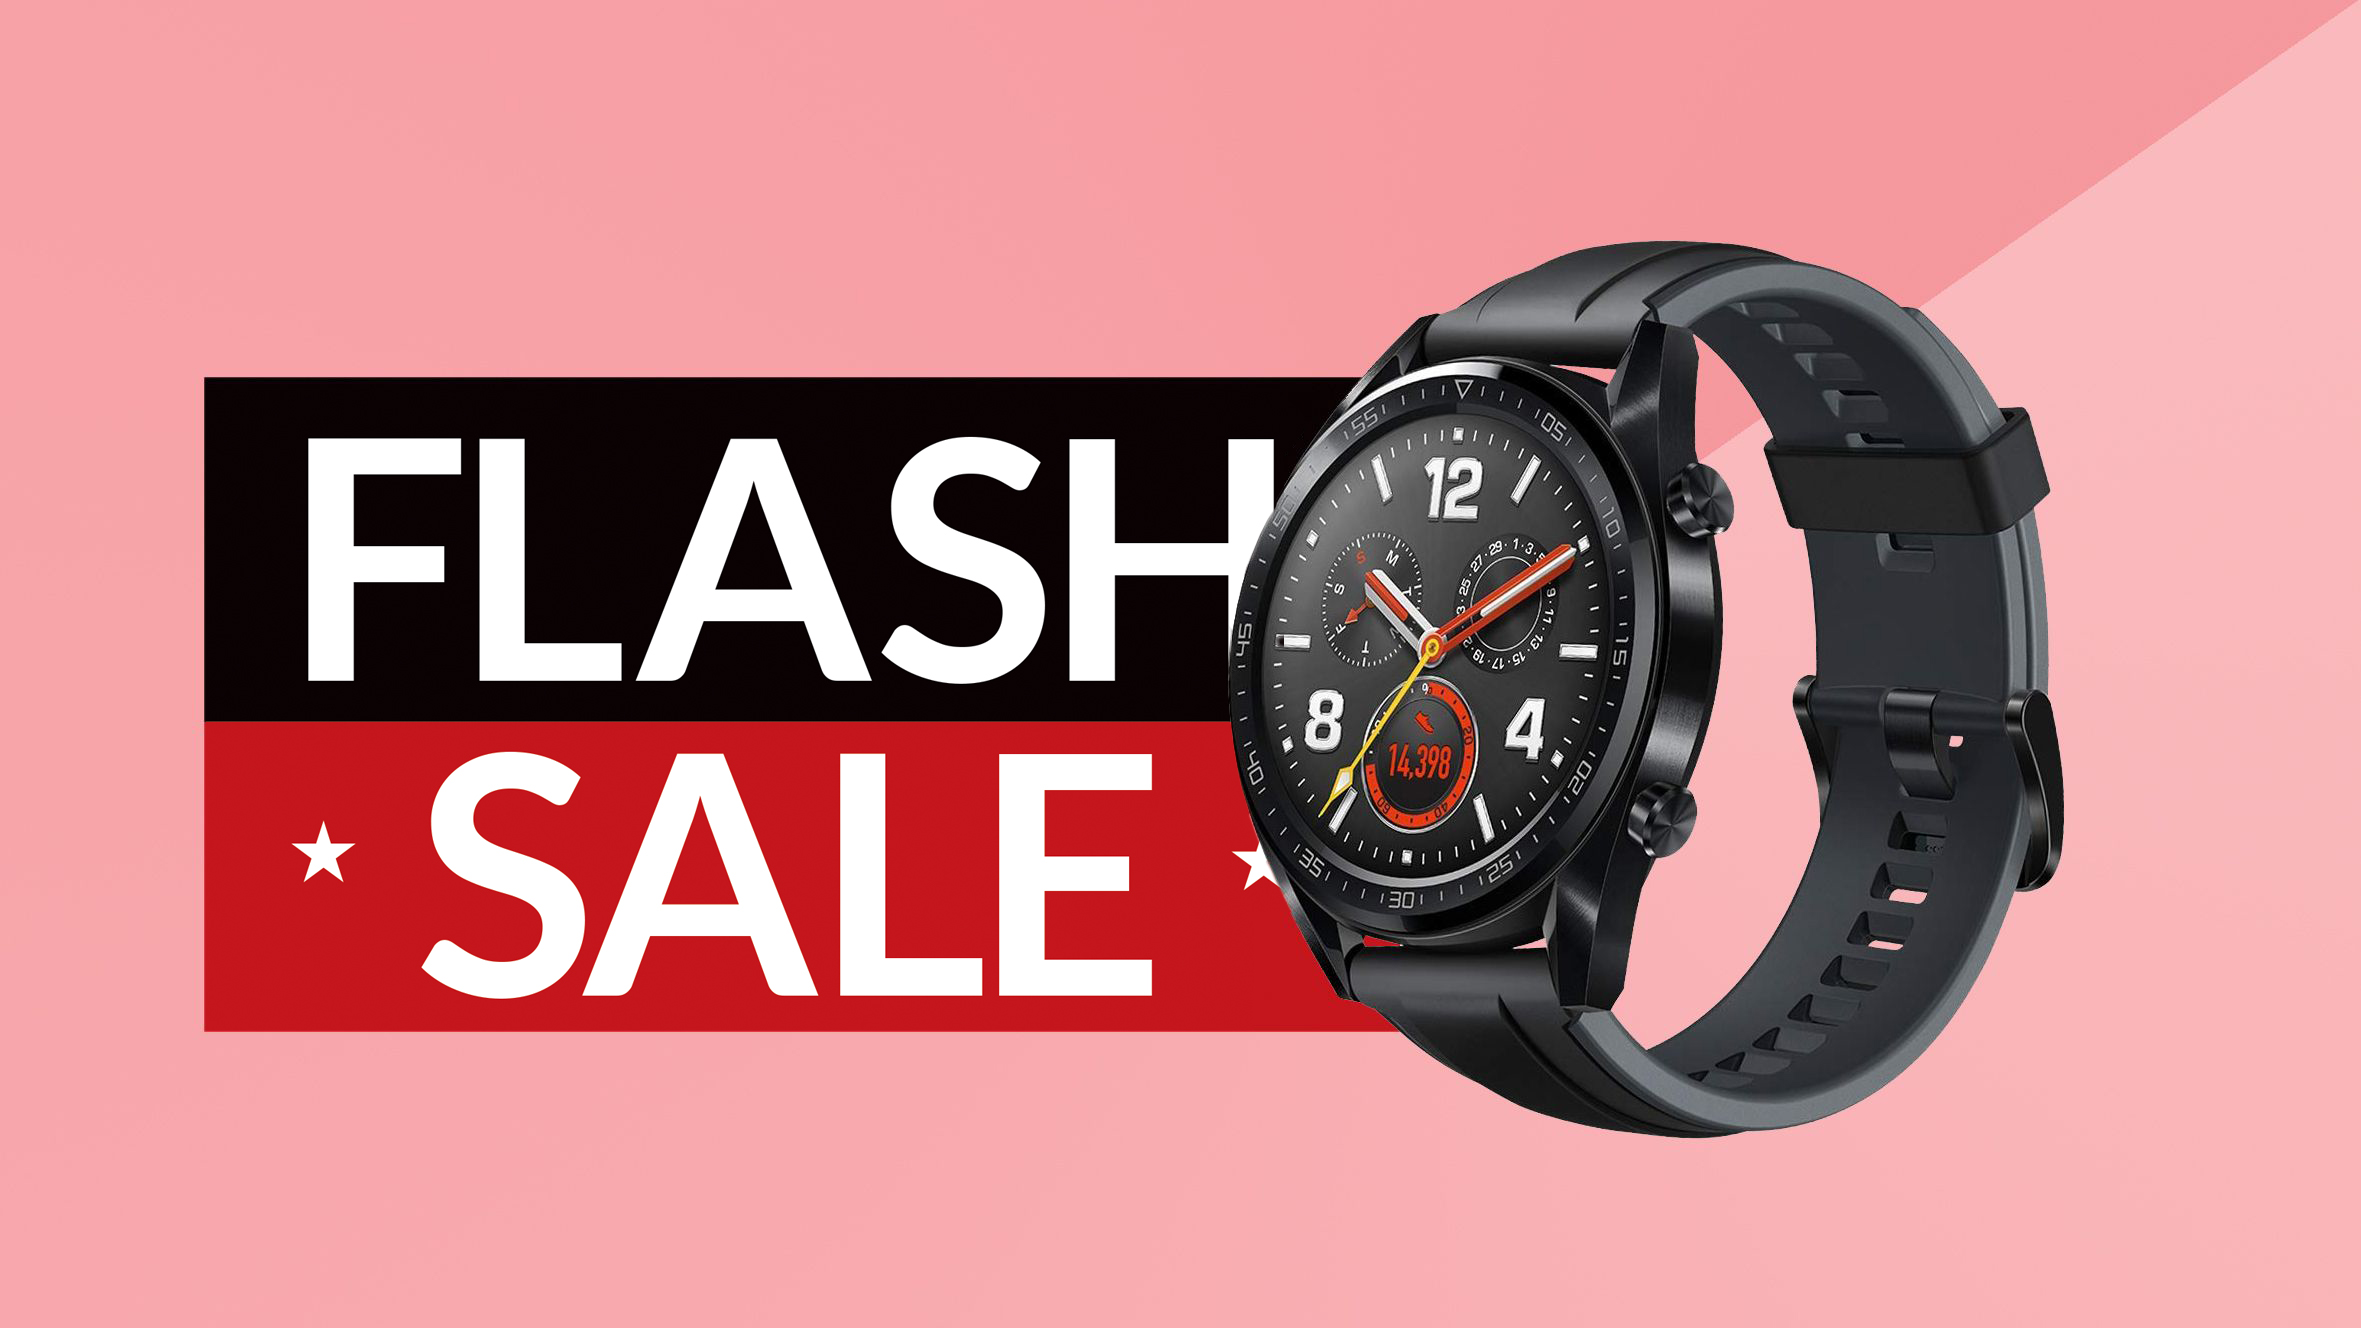 Huawei Watch GT deals for October 2020 